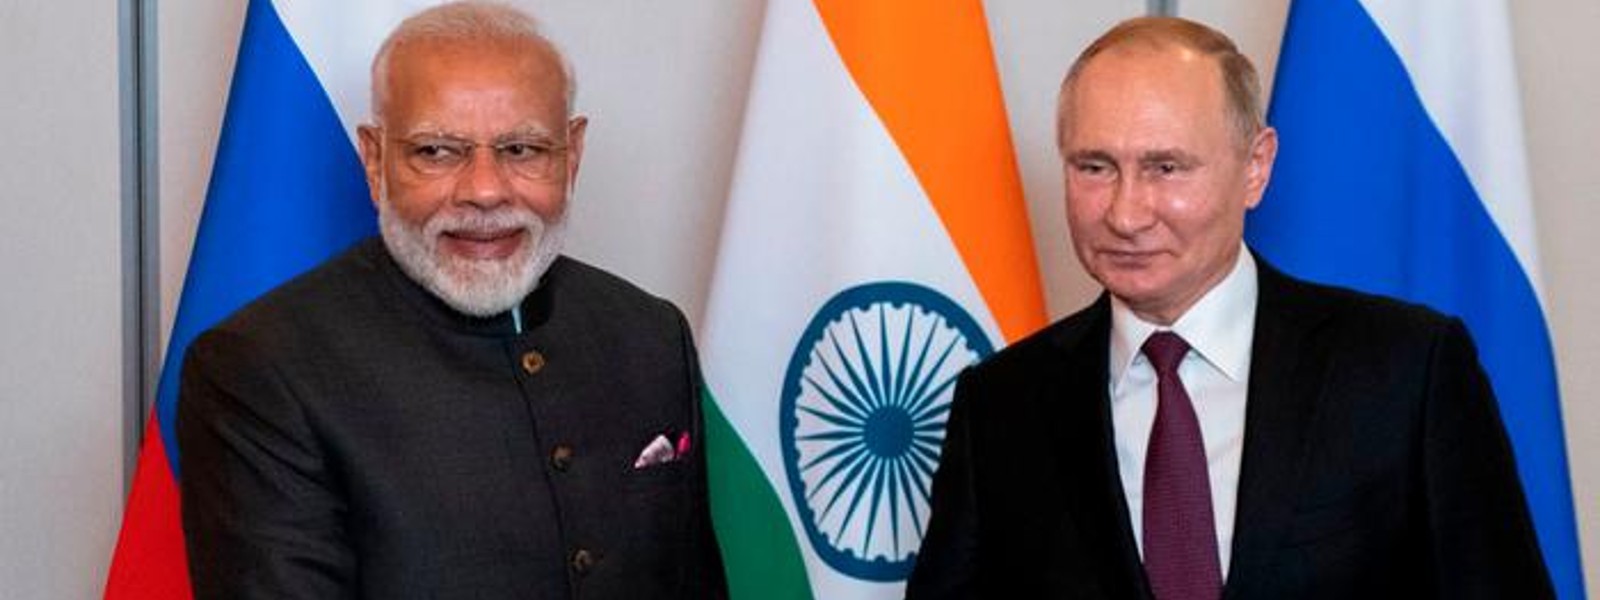 Modi receives Russian President Vladimir Putin for talks